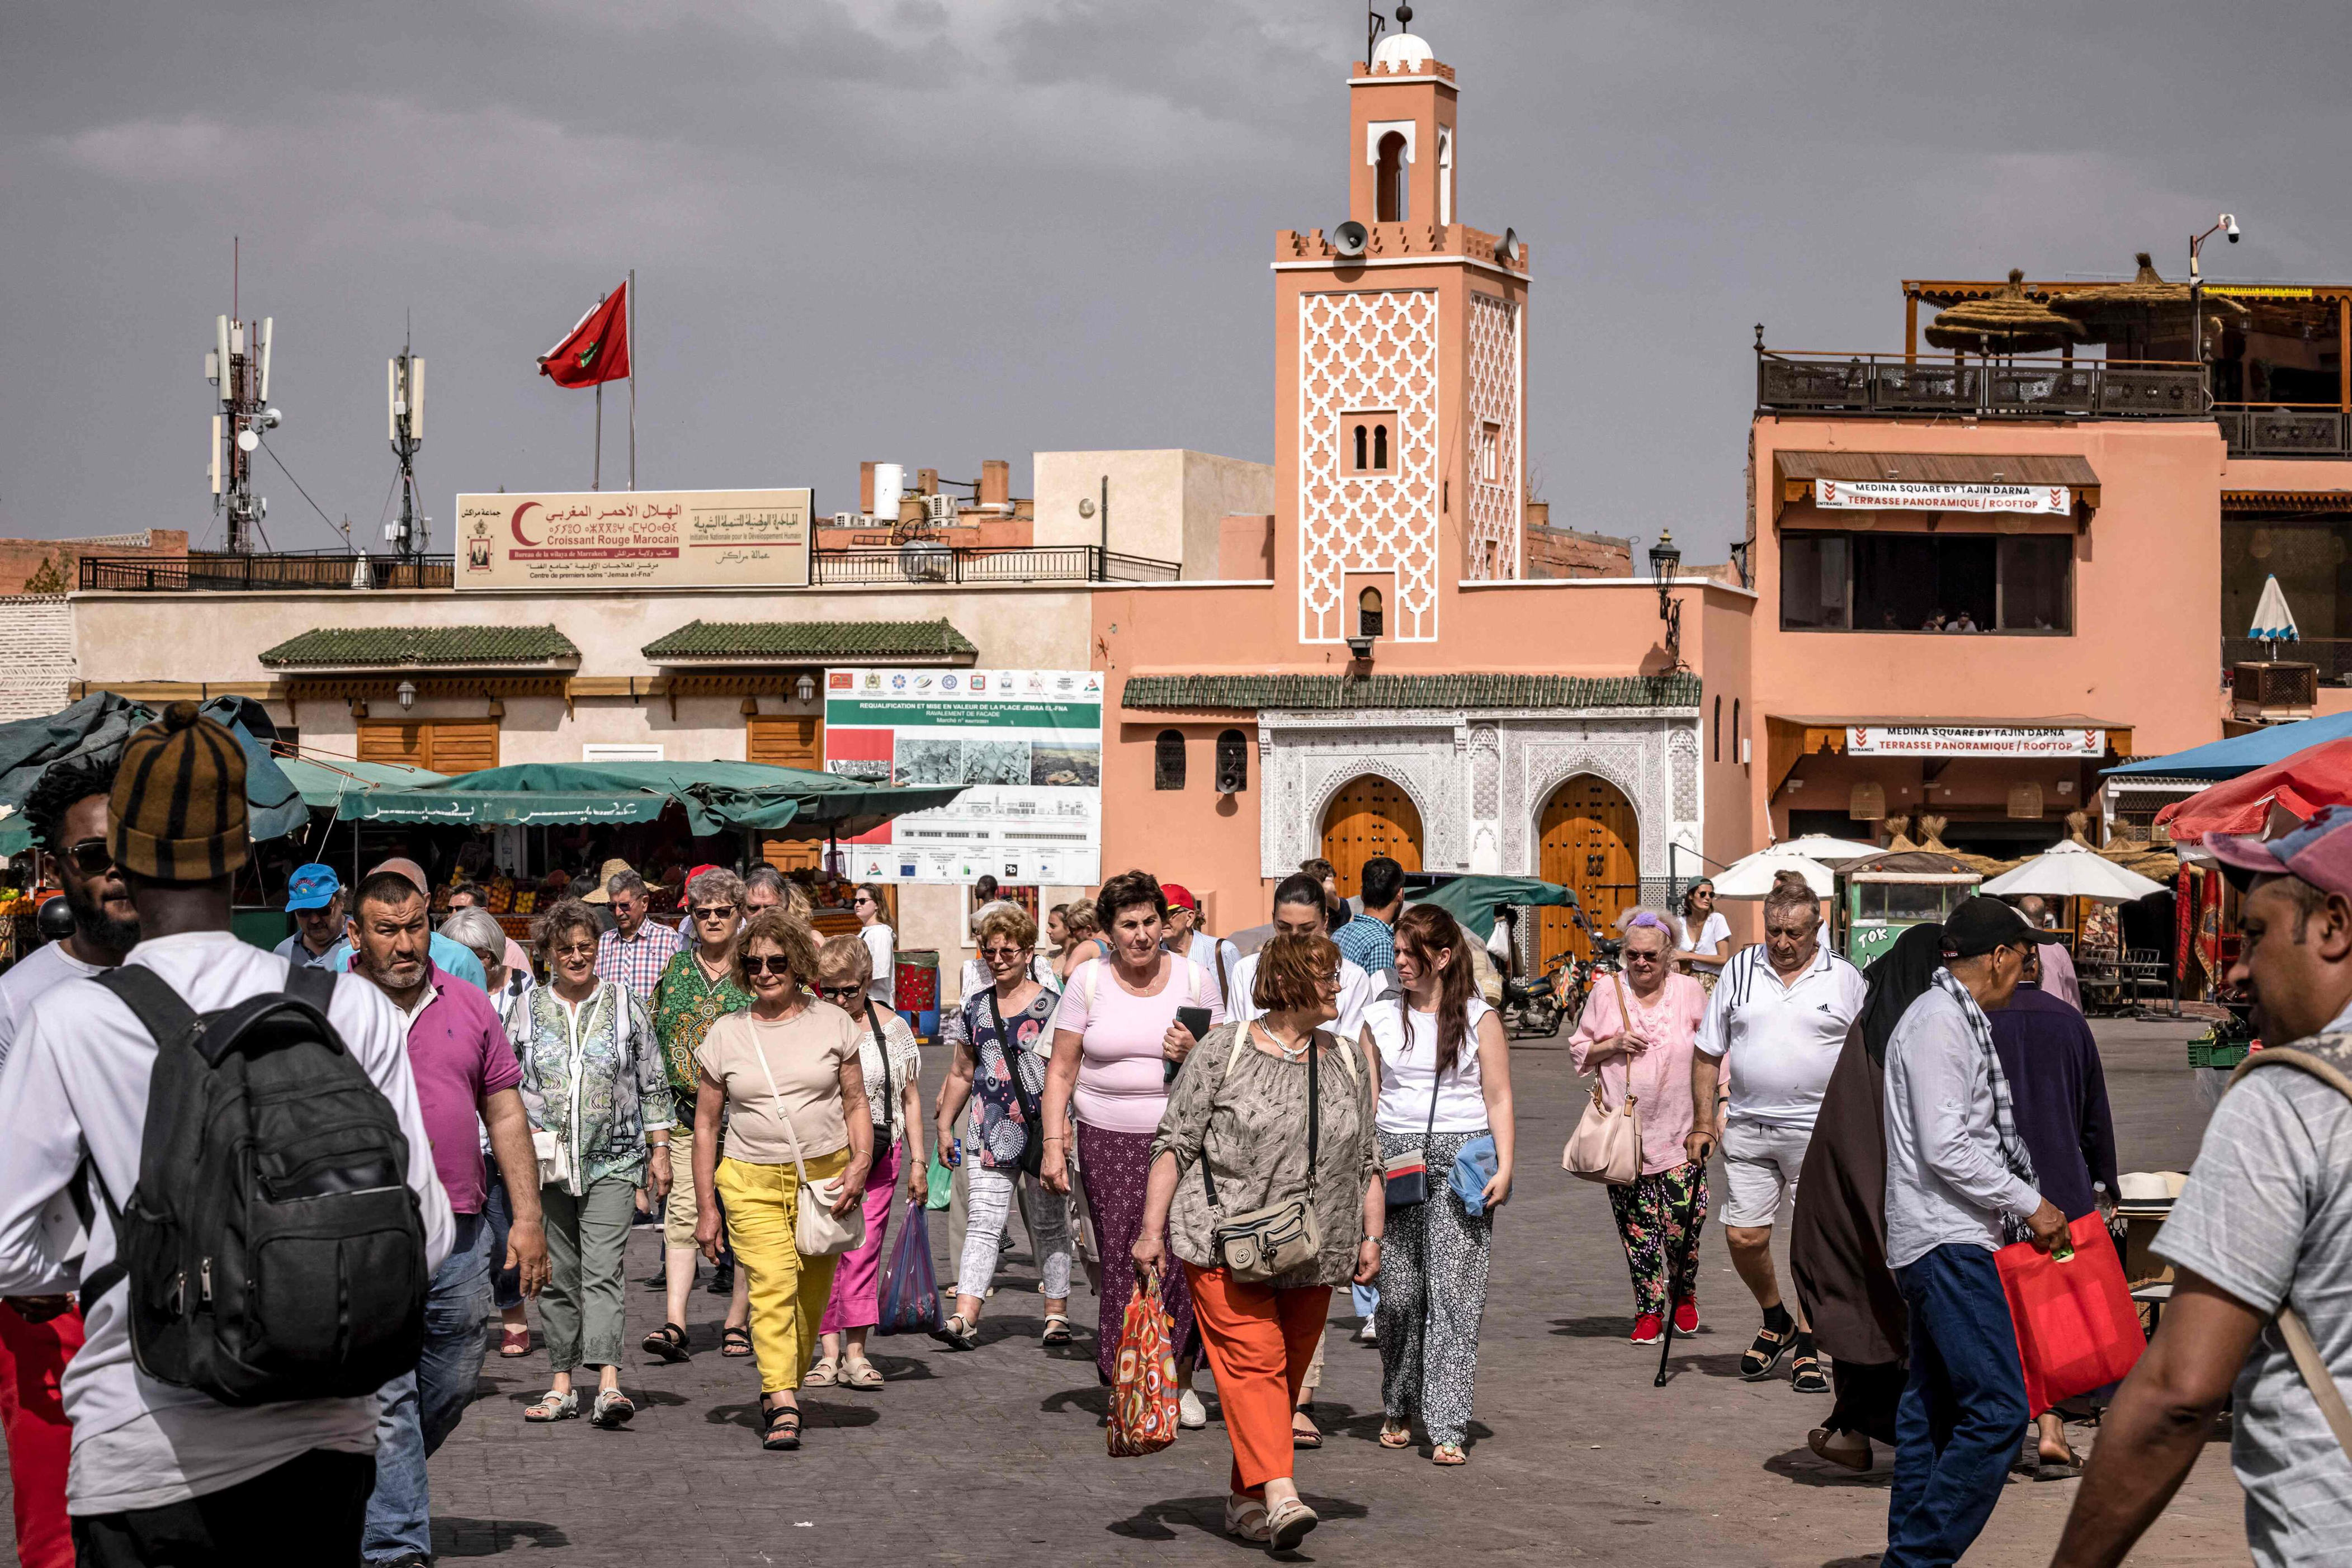 morocco's economy set to grow 3.5% in medium term, imf says